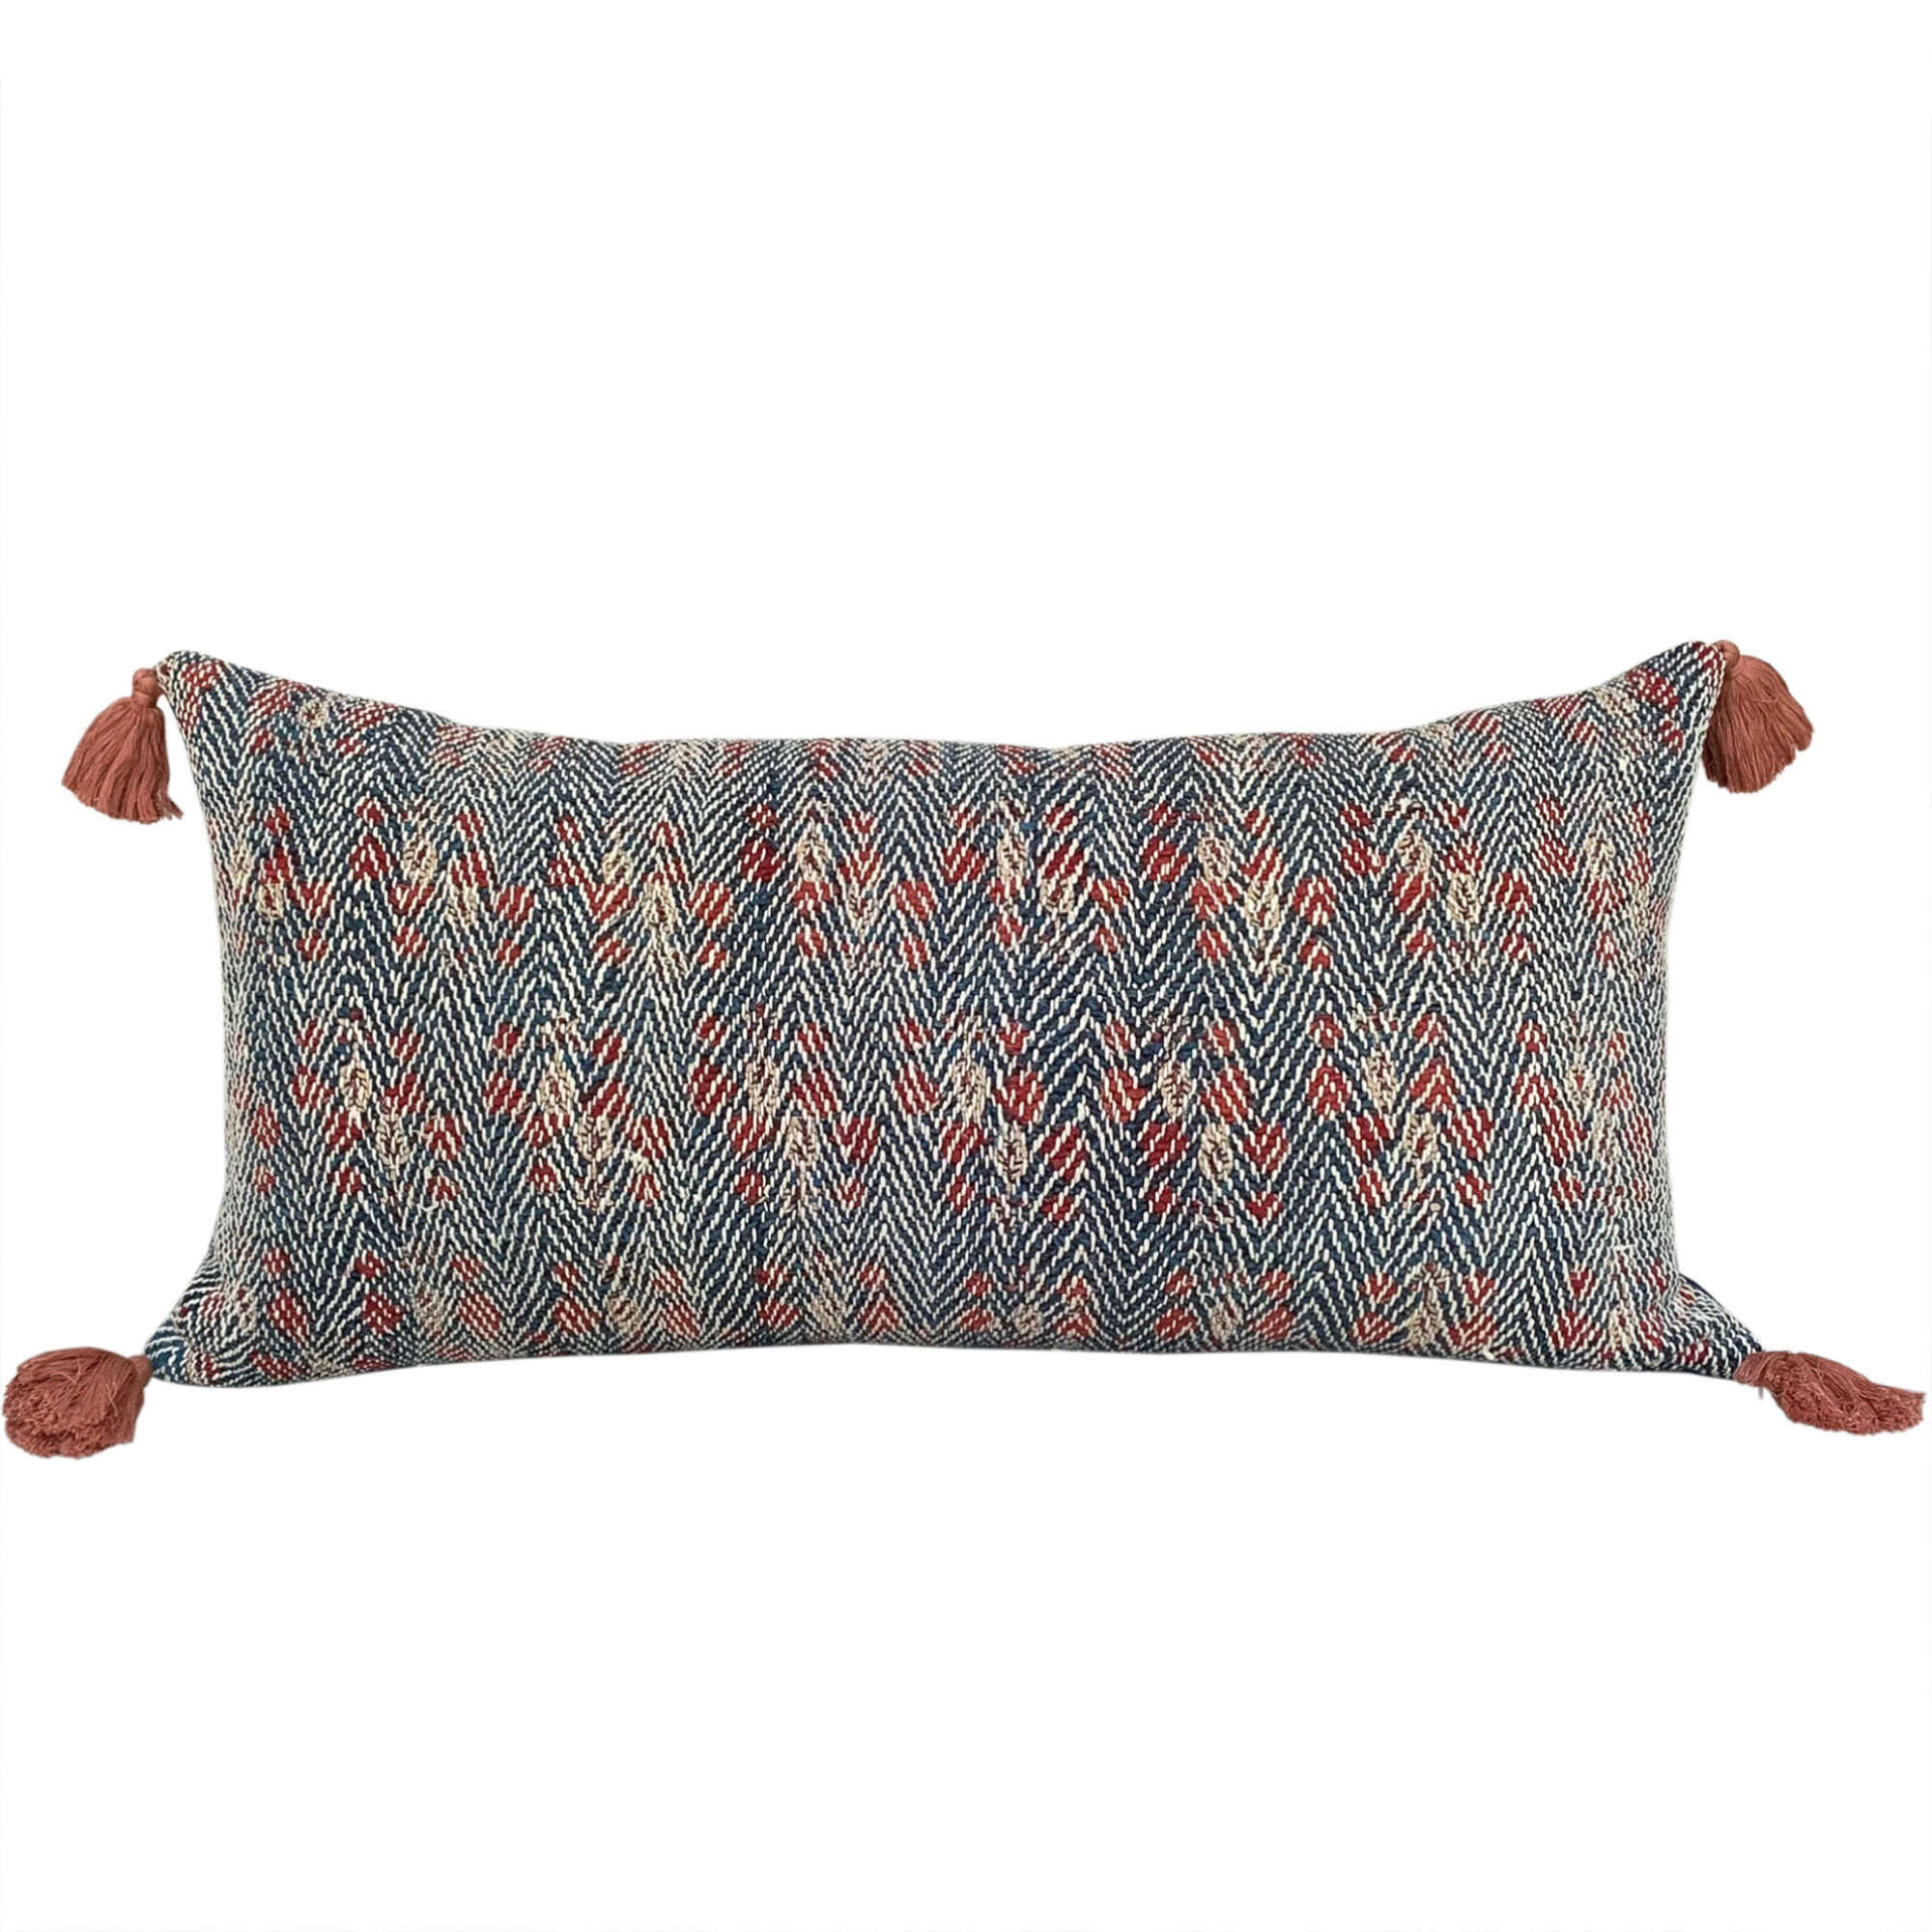 Large Banjara cushion with tassels